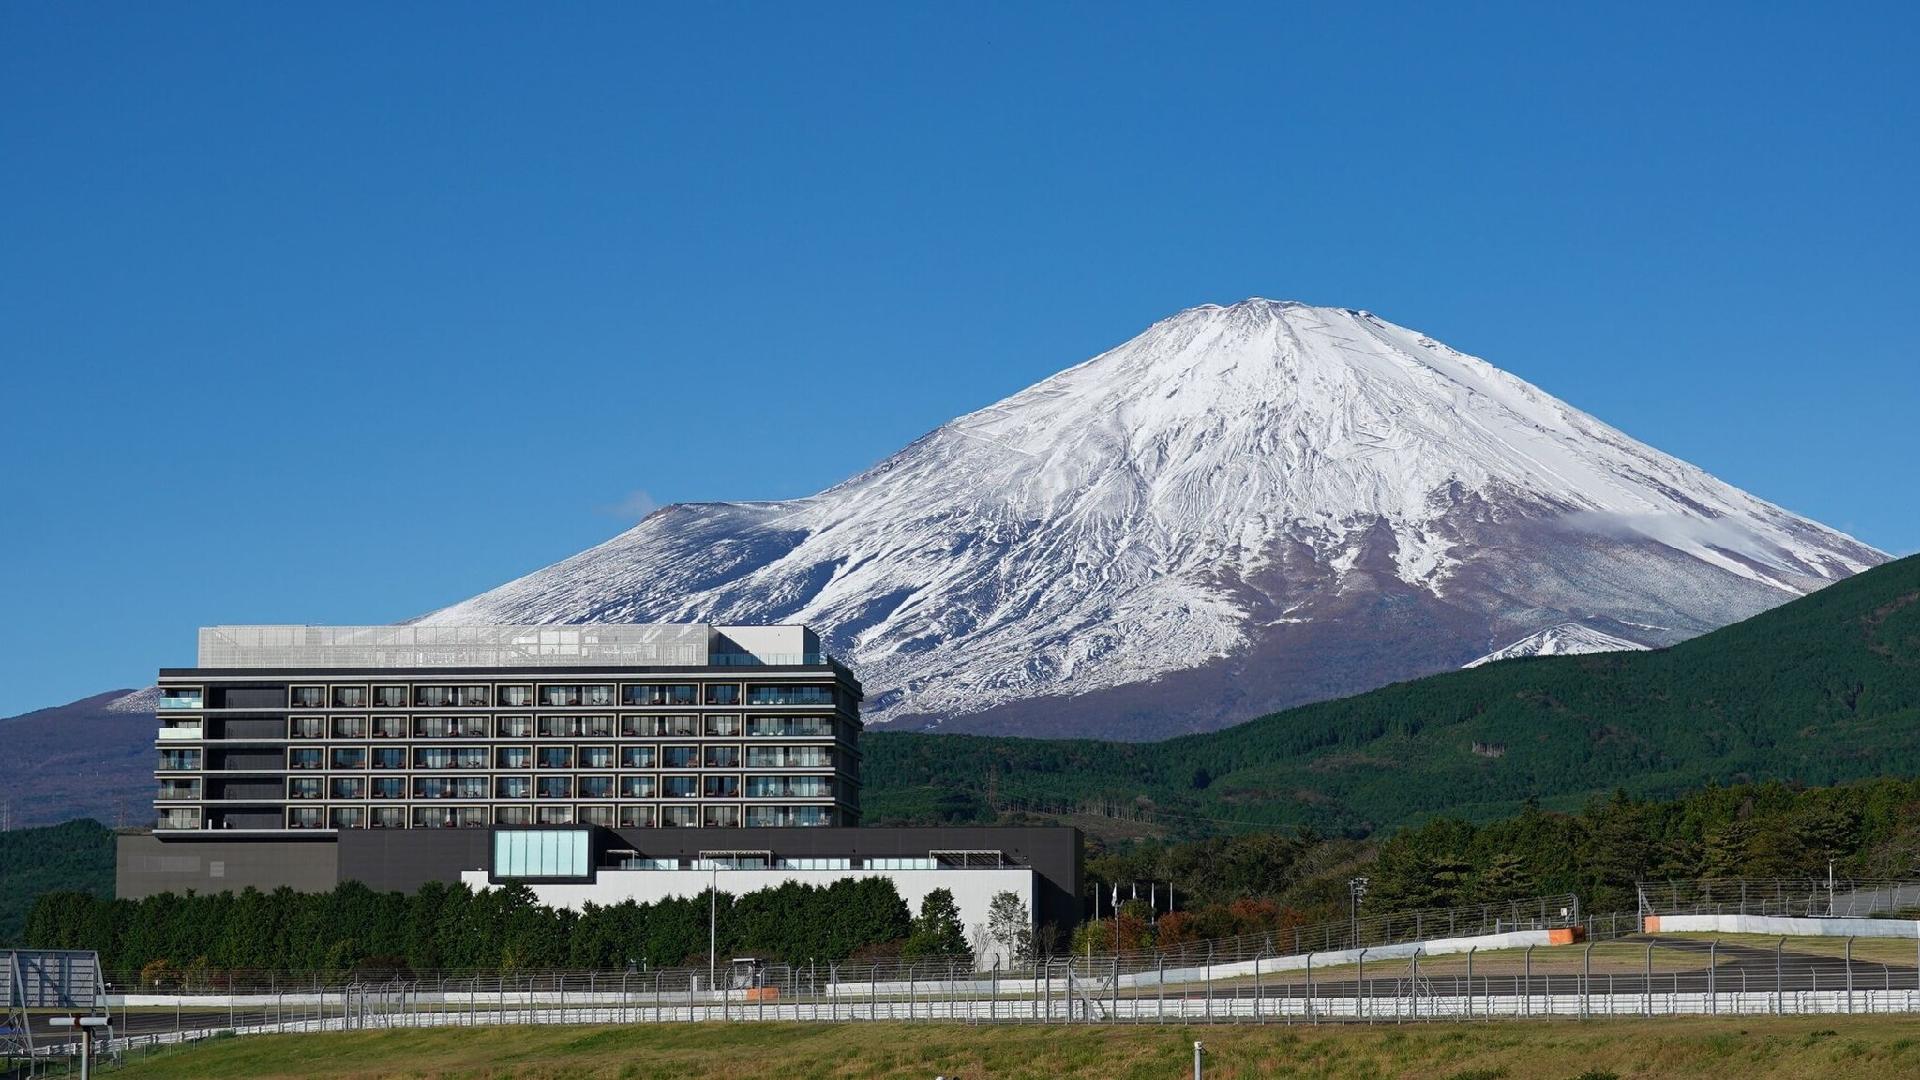 Fuji Speedway Hotel (World of Hyatt)